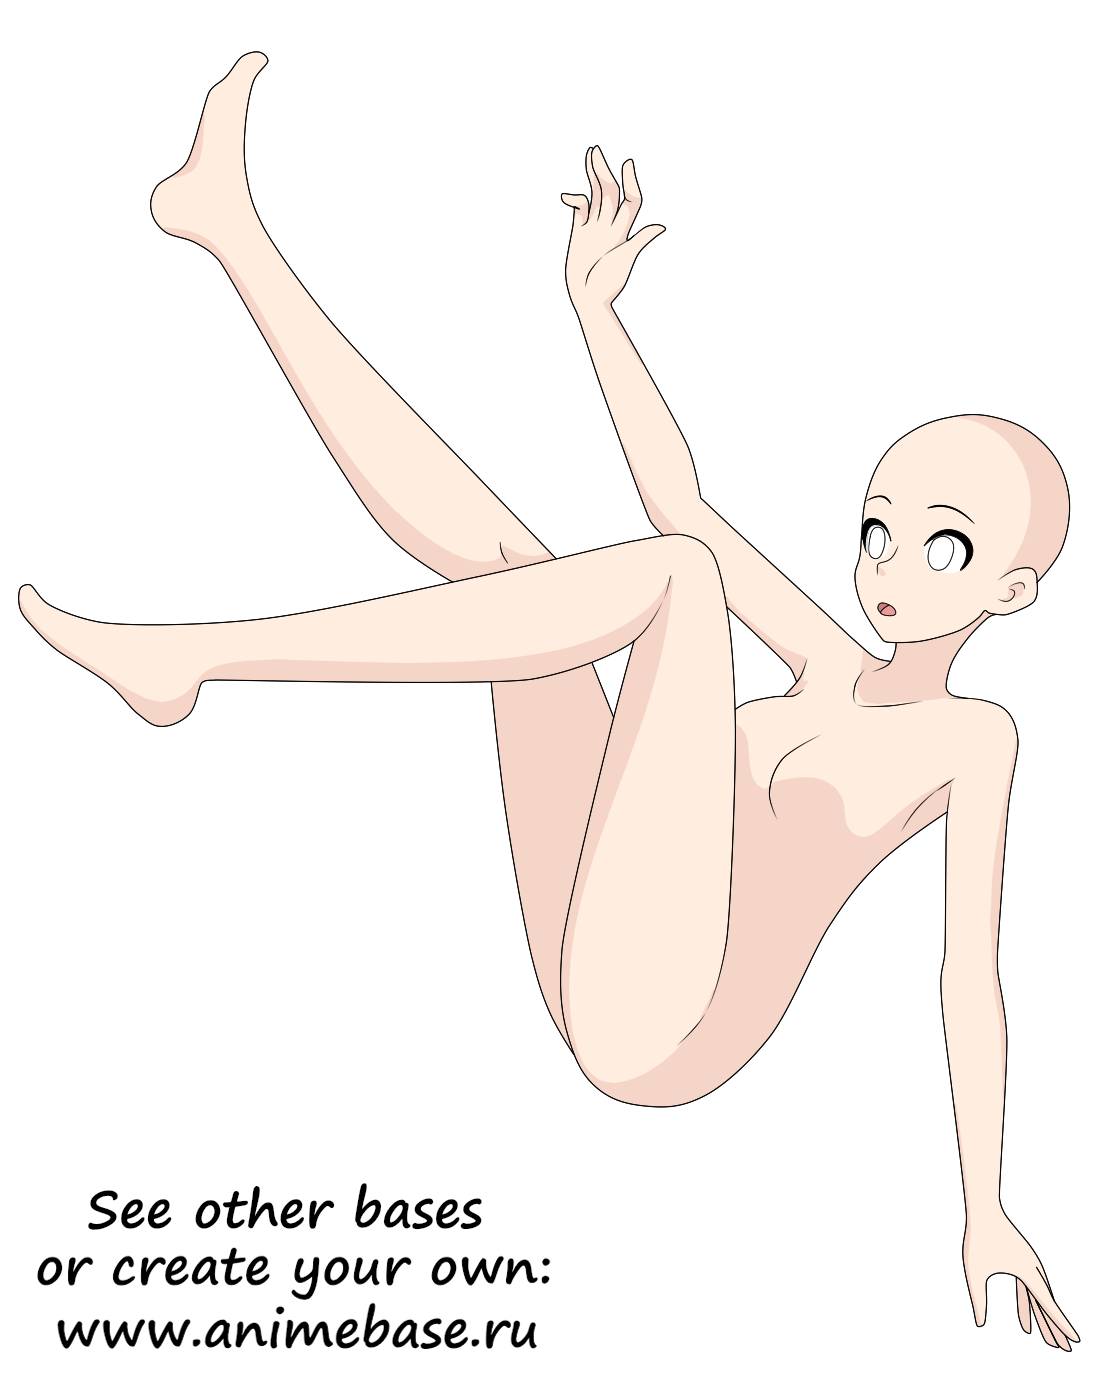 Easy pose outline - Anime Bases .INFO